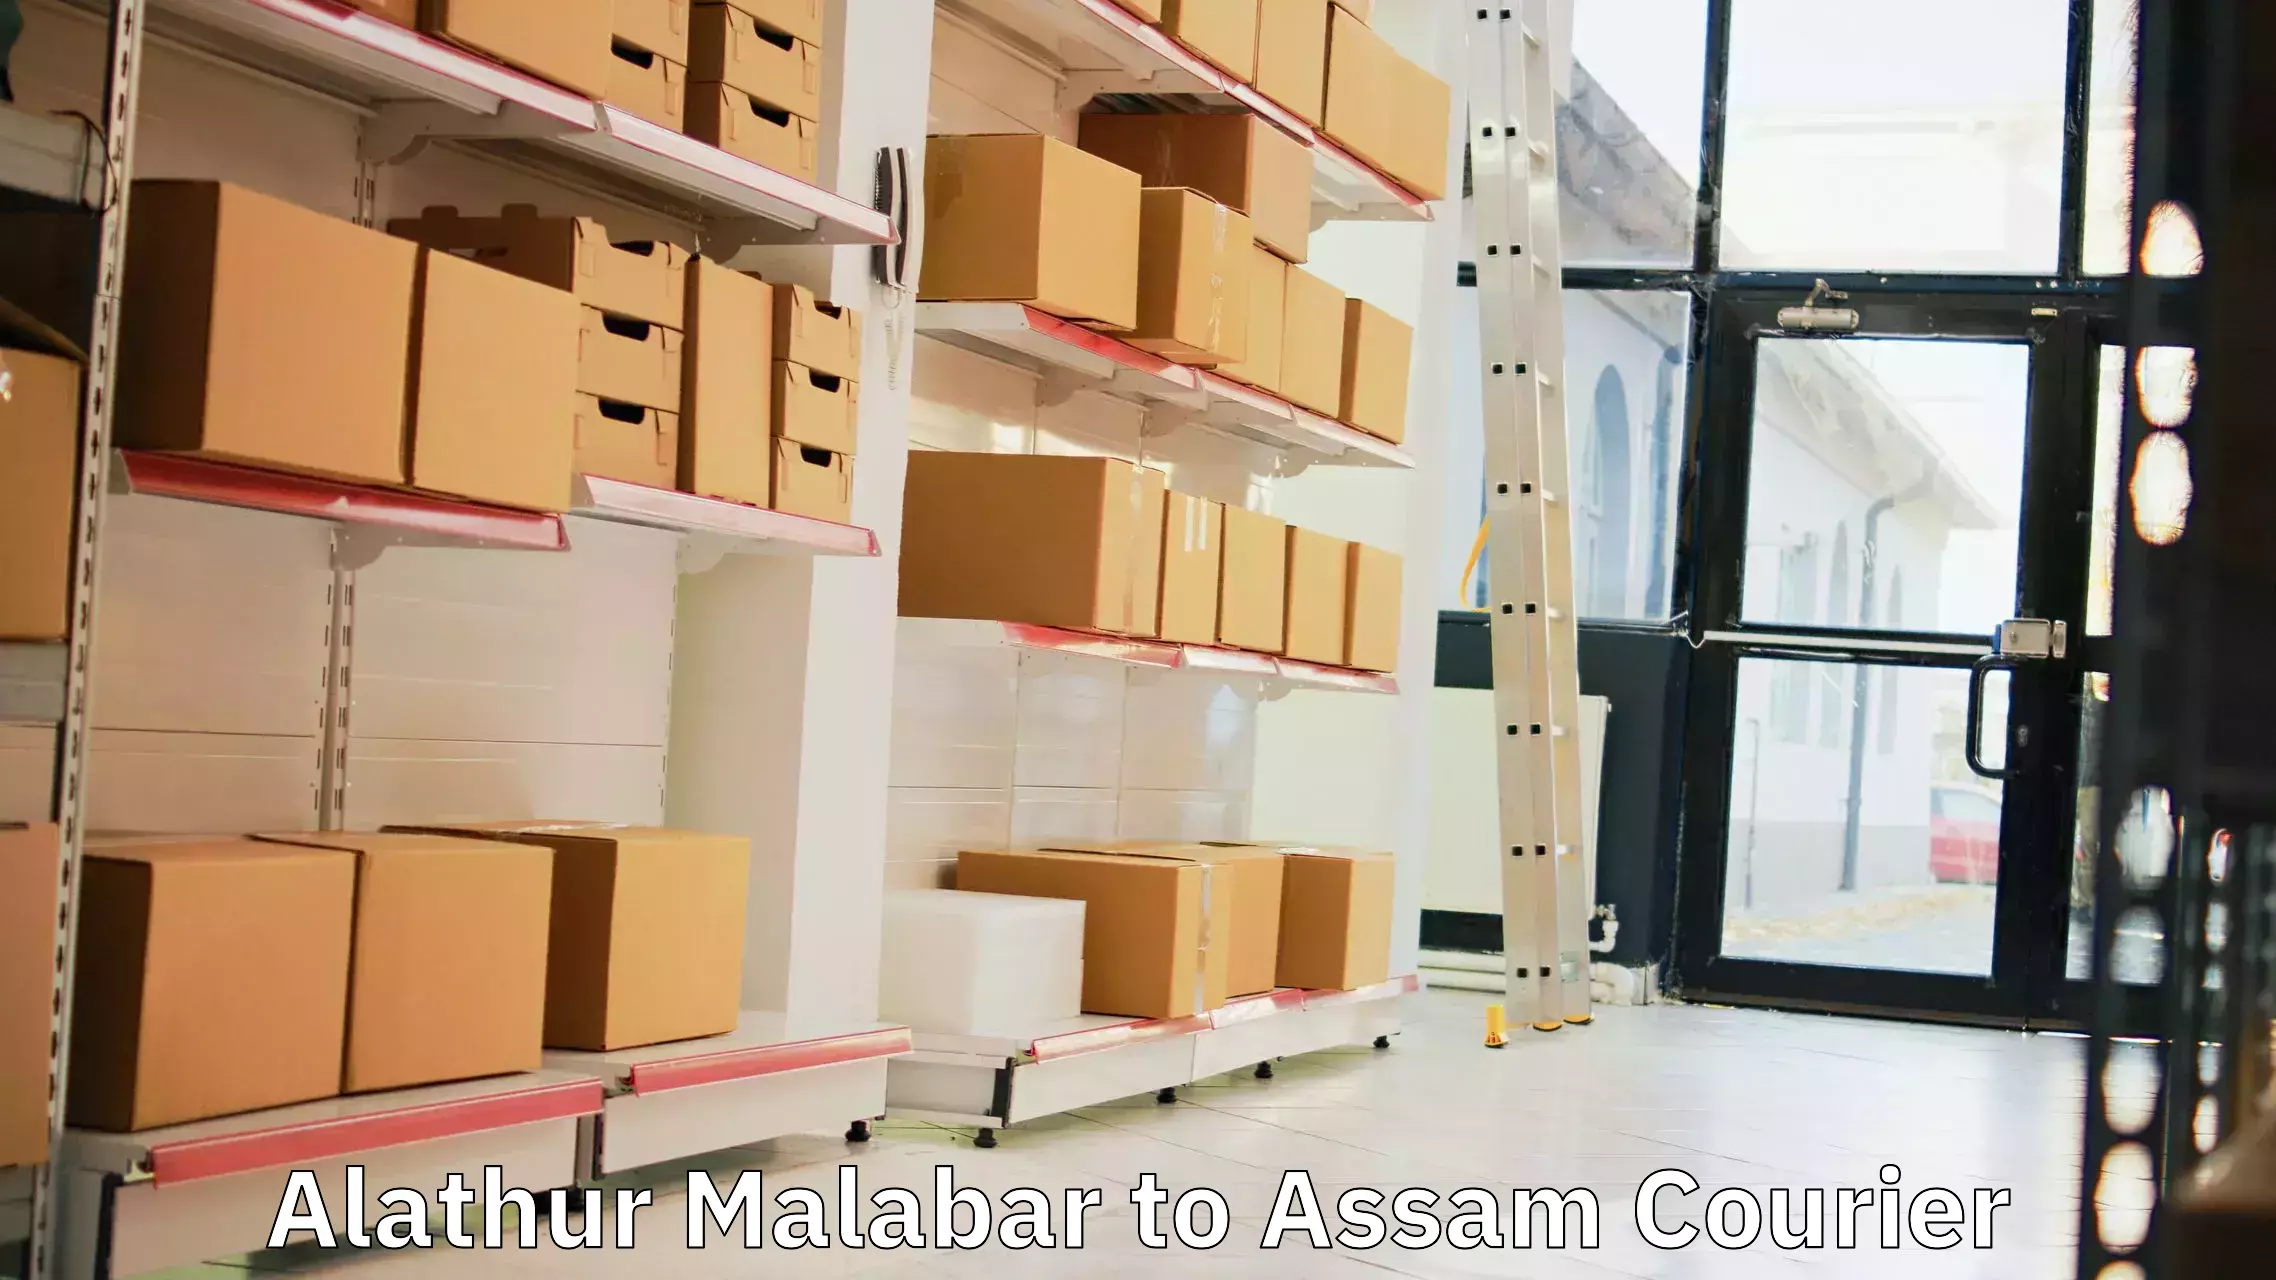 Global shipping networks Alathur Malabar to Assam